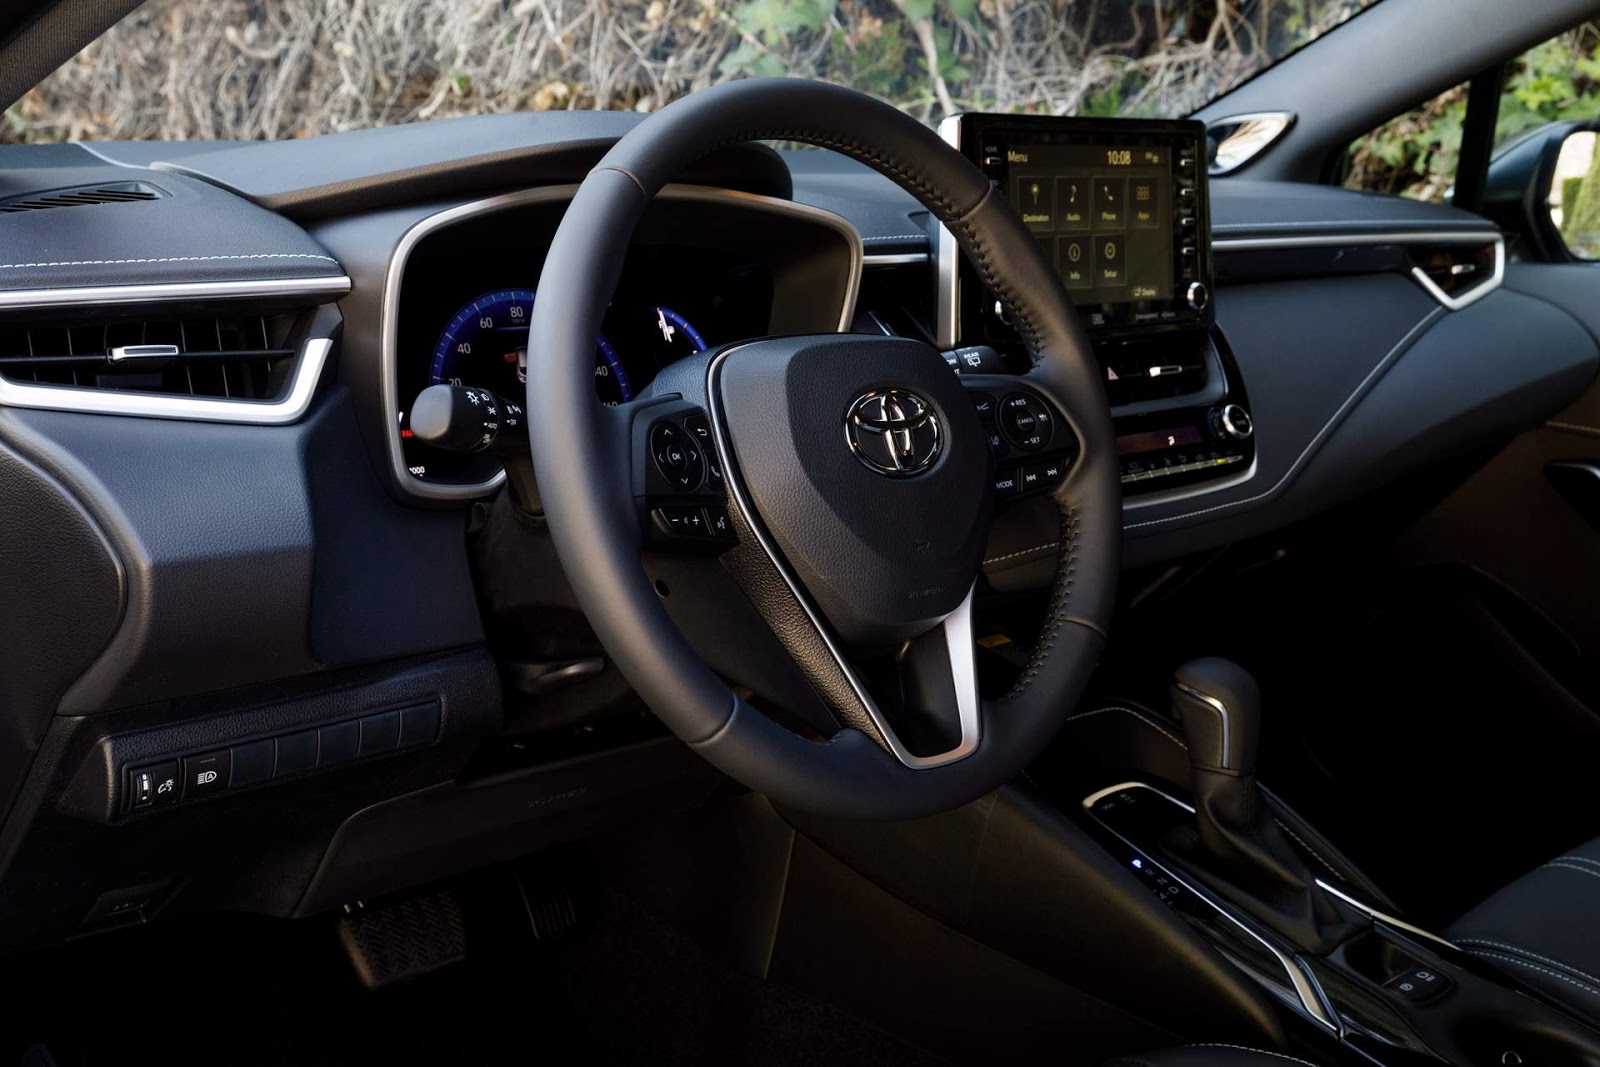 Toyota Corolla 2019 Hatch chega mais esportivo e seguro